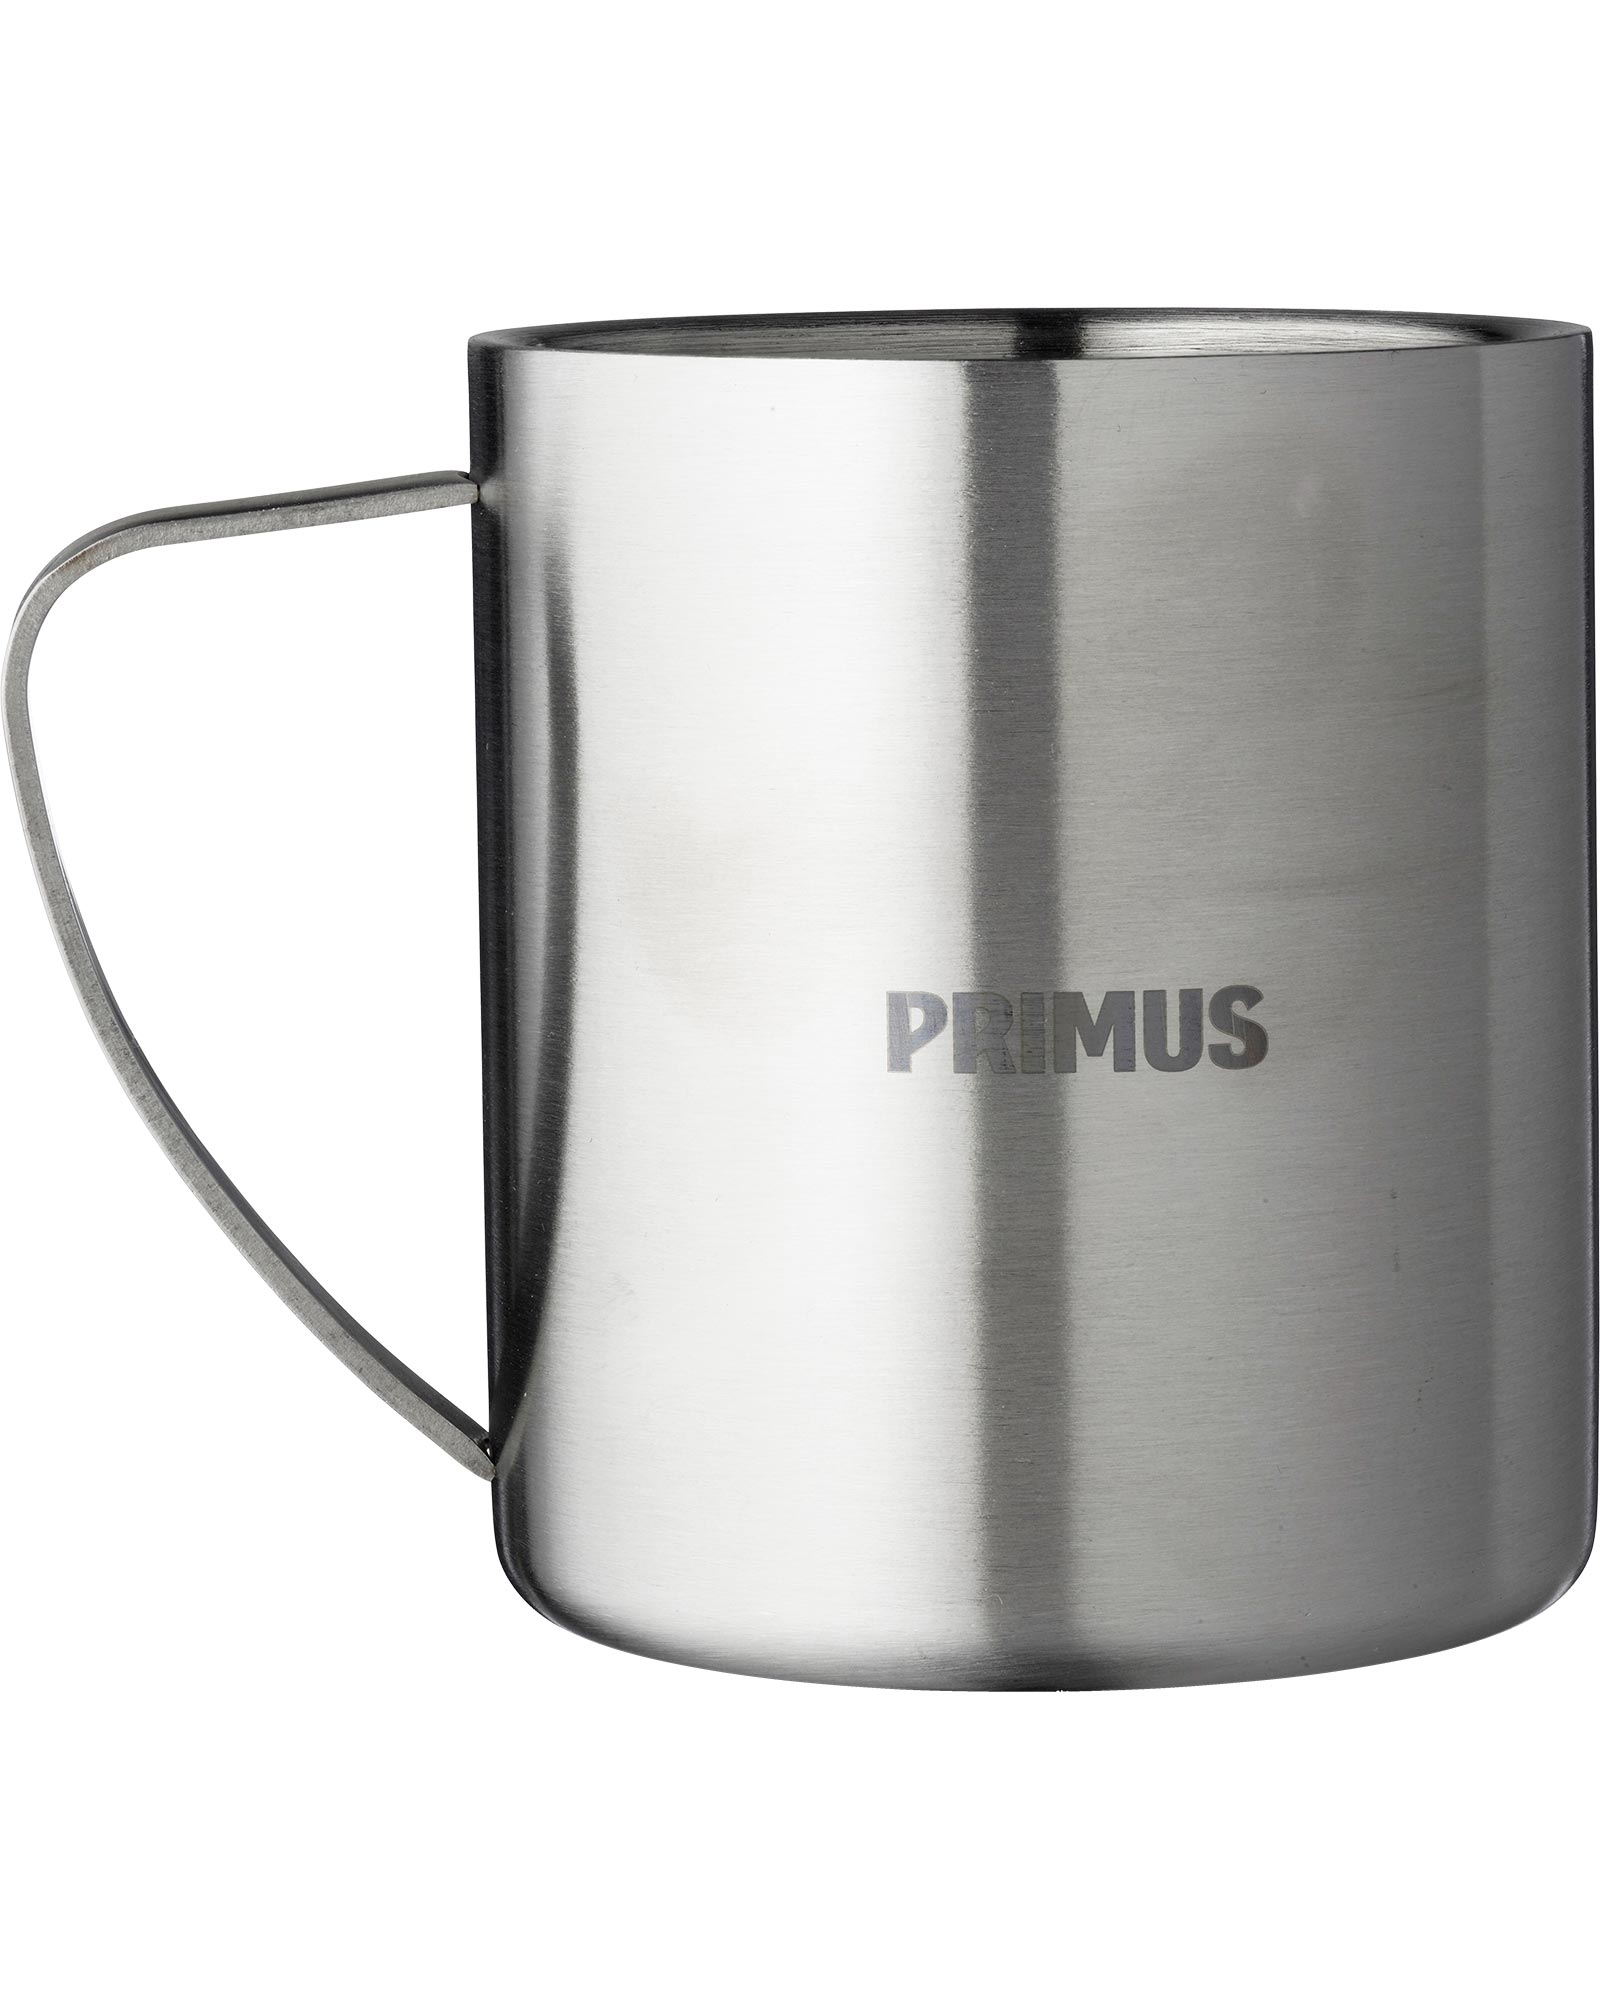 Primus 4 Season Mug 0.3L